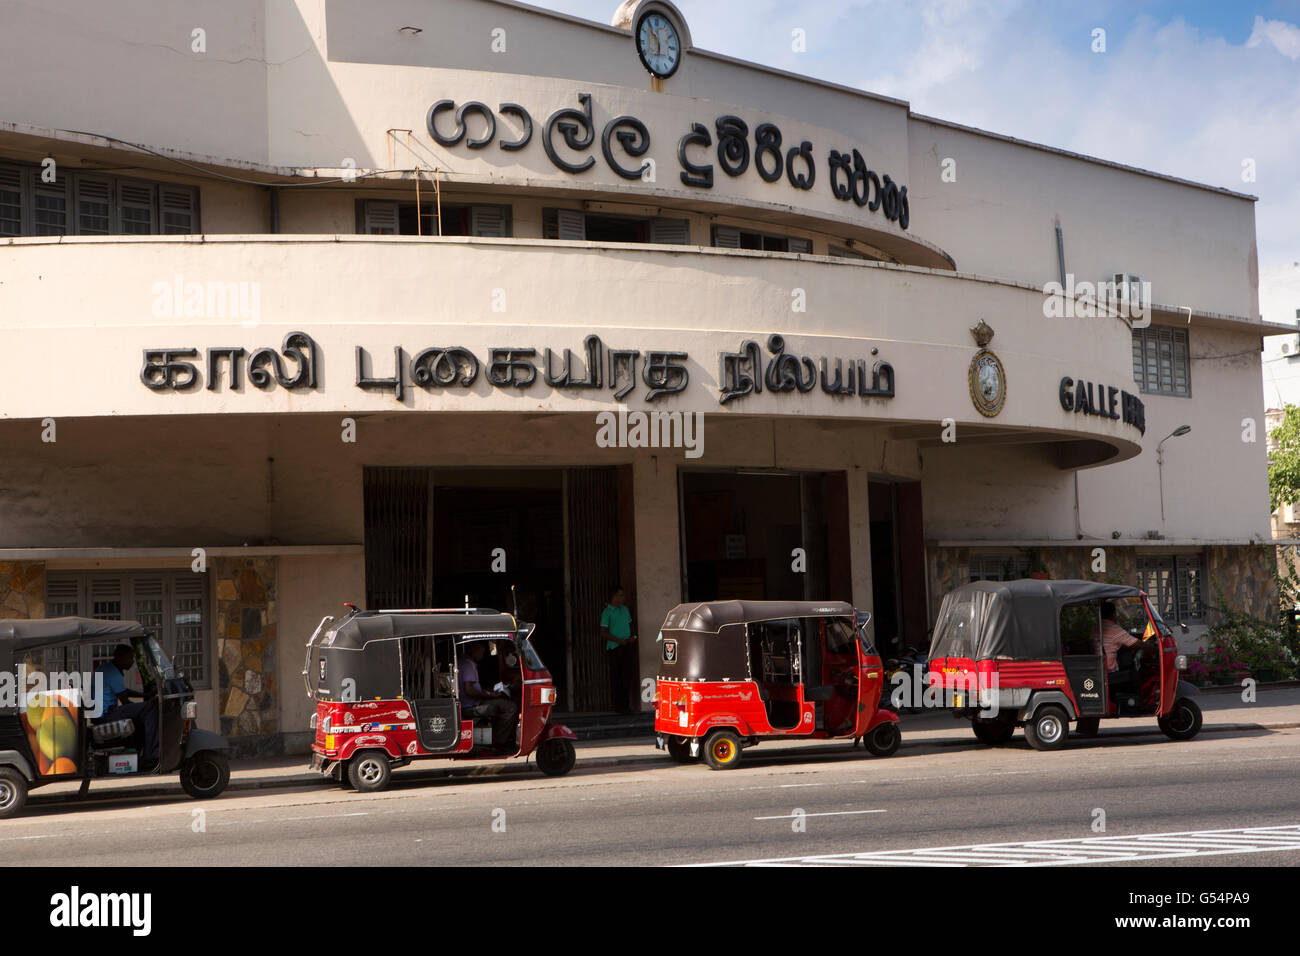 Sri Lanka, Galle, Colombo Road, Railway Station with autorickshaws parked outside Stock Photo